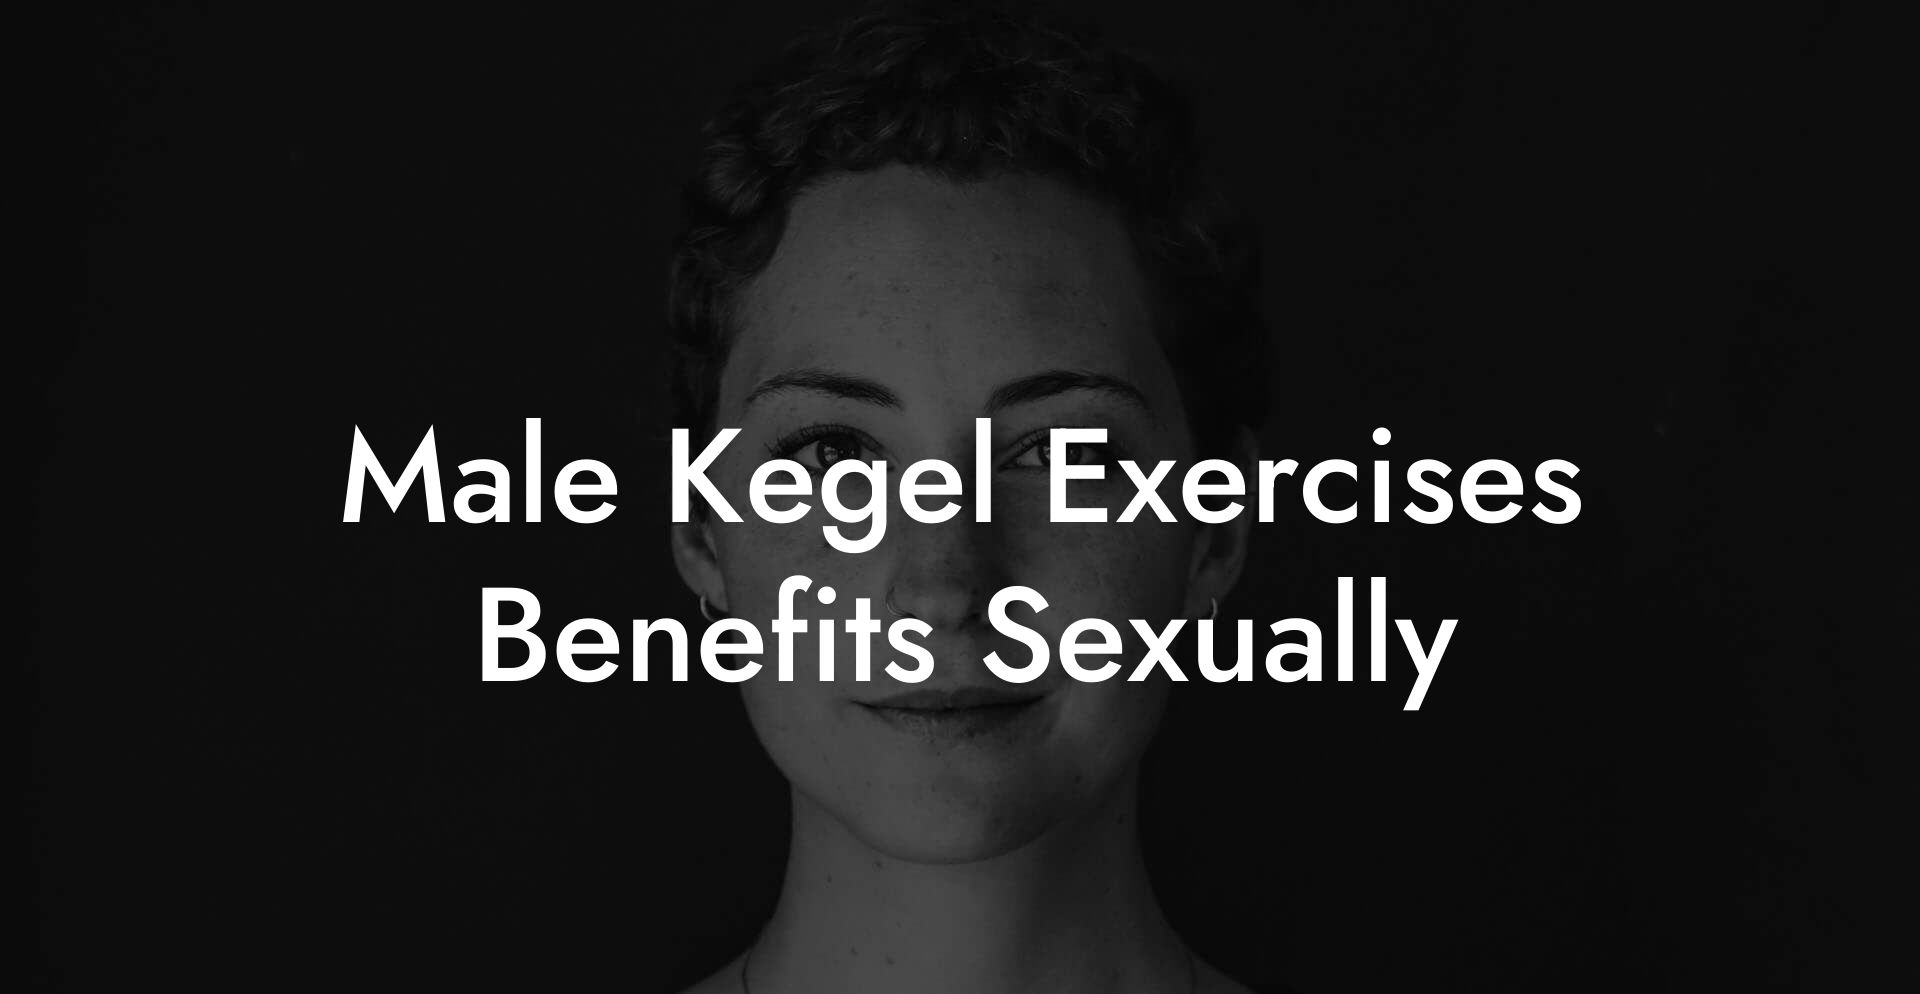 Male Kegel Exercises Benefits Sexually